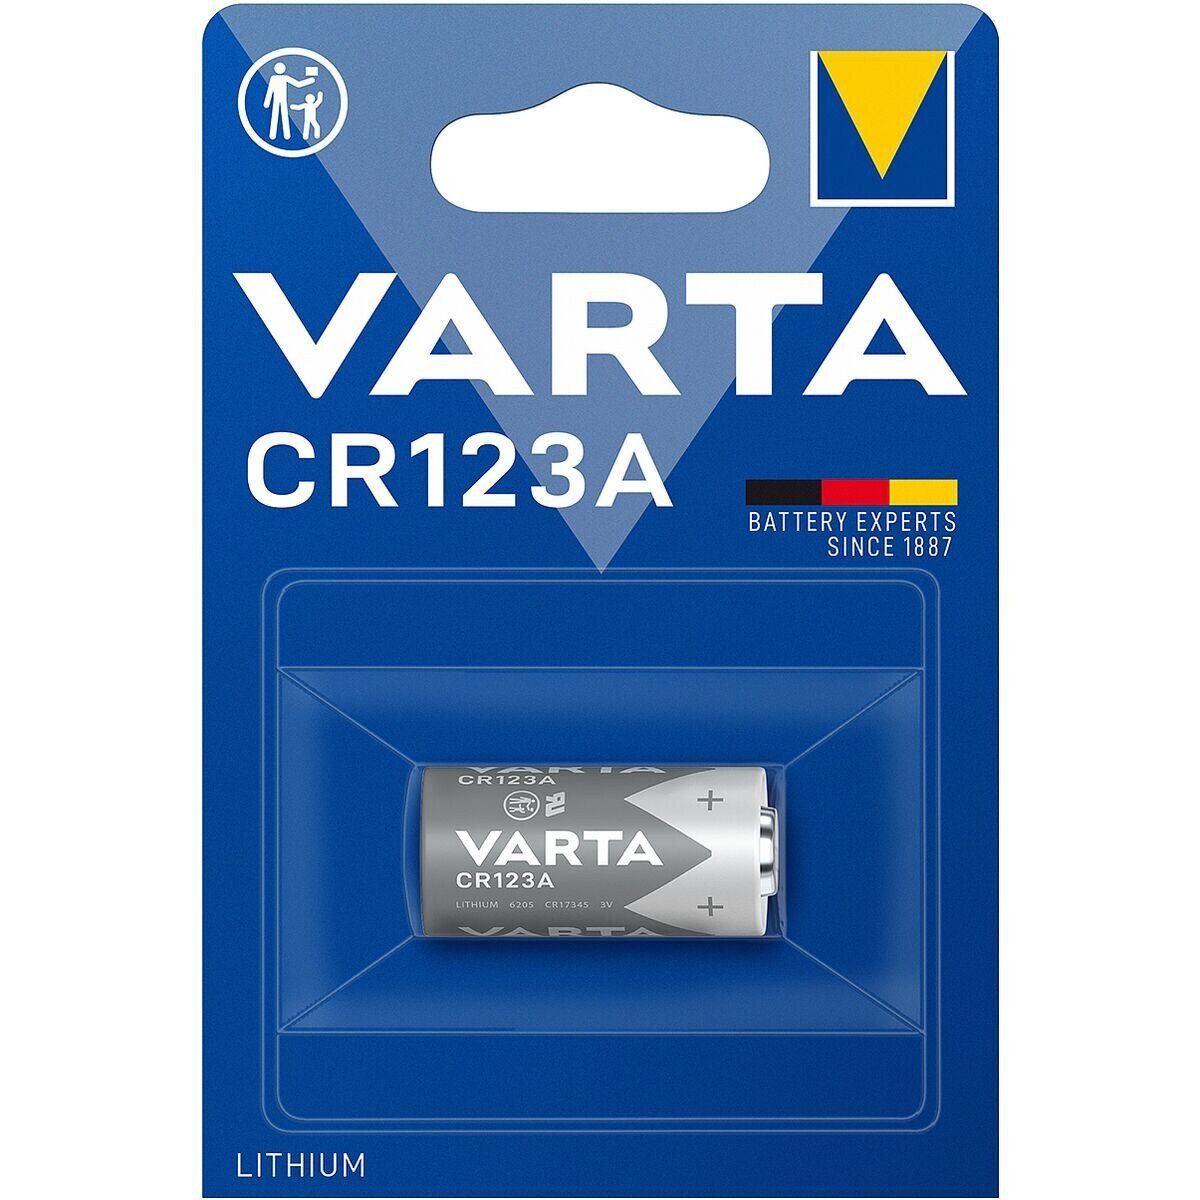 Lithium Lithium CR123A, VARTA Fotobatterie, V, 1 3 (3 Photo St), V,